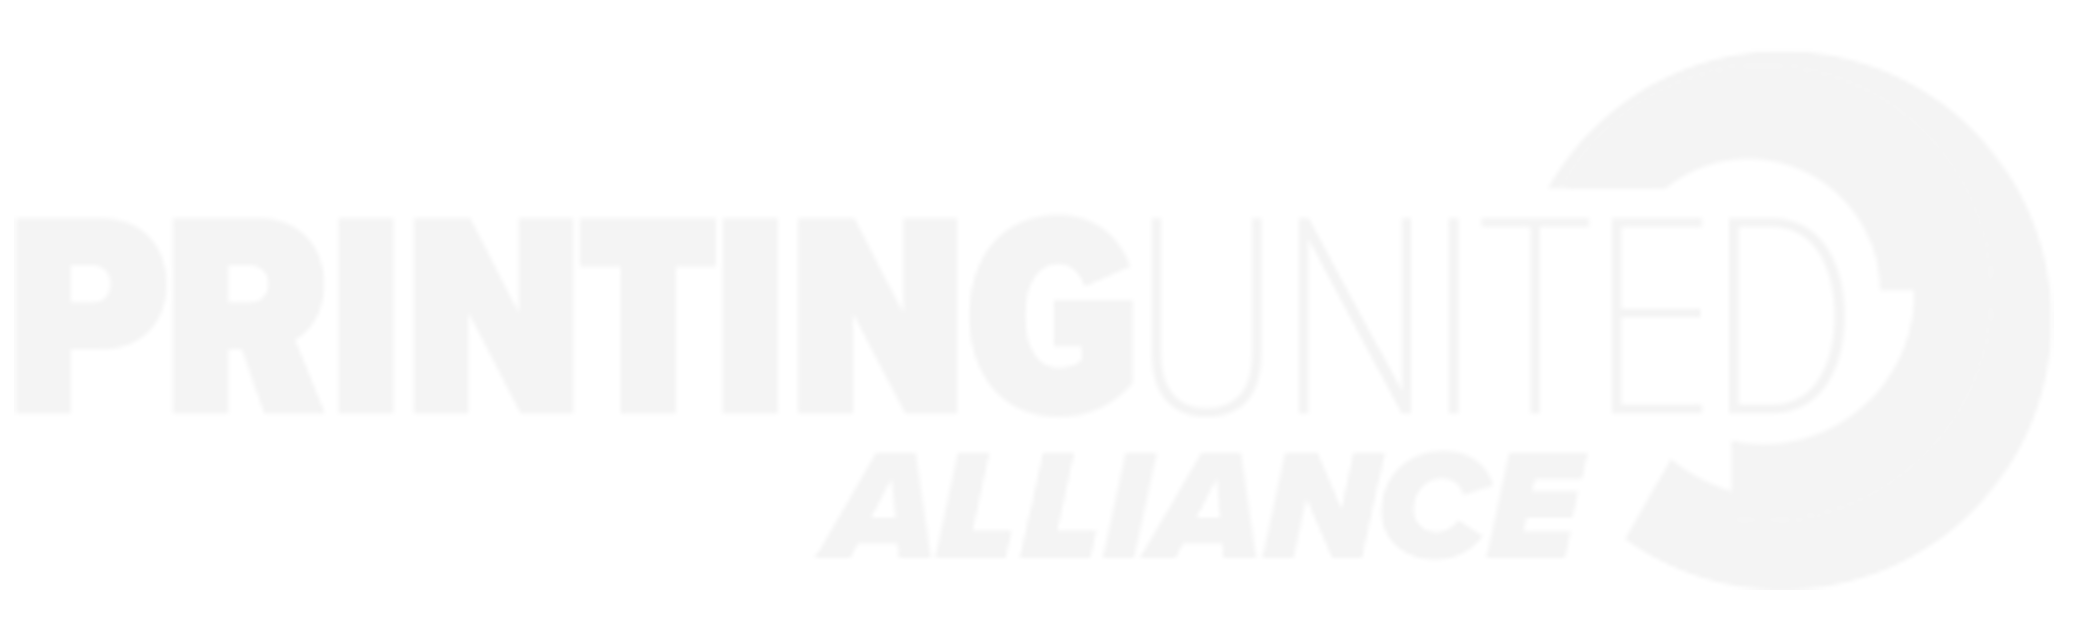 printing-united-alliance-logo-white.png